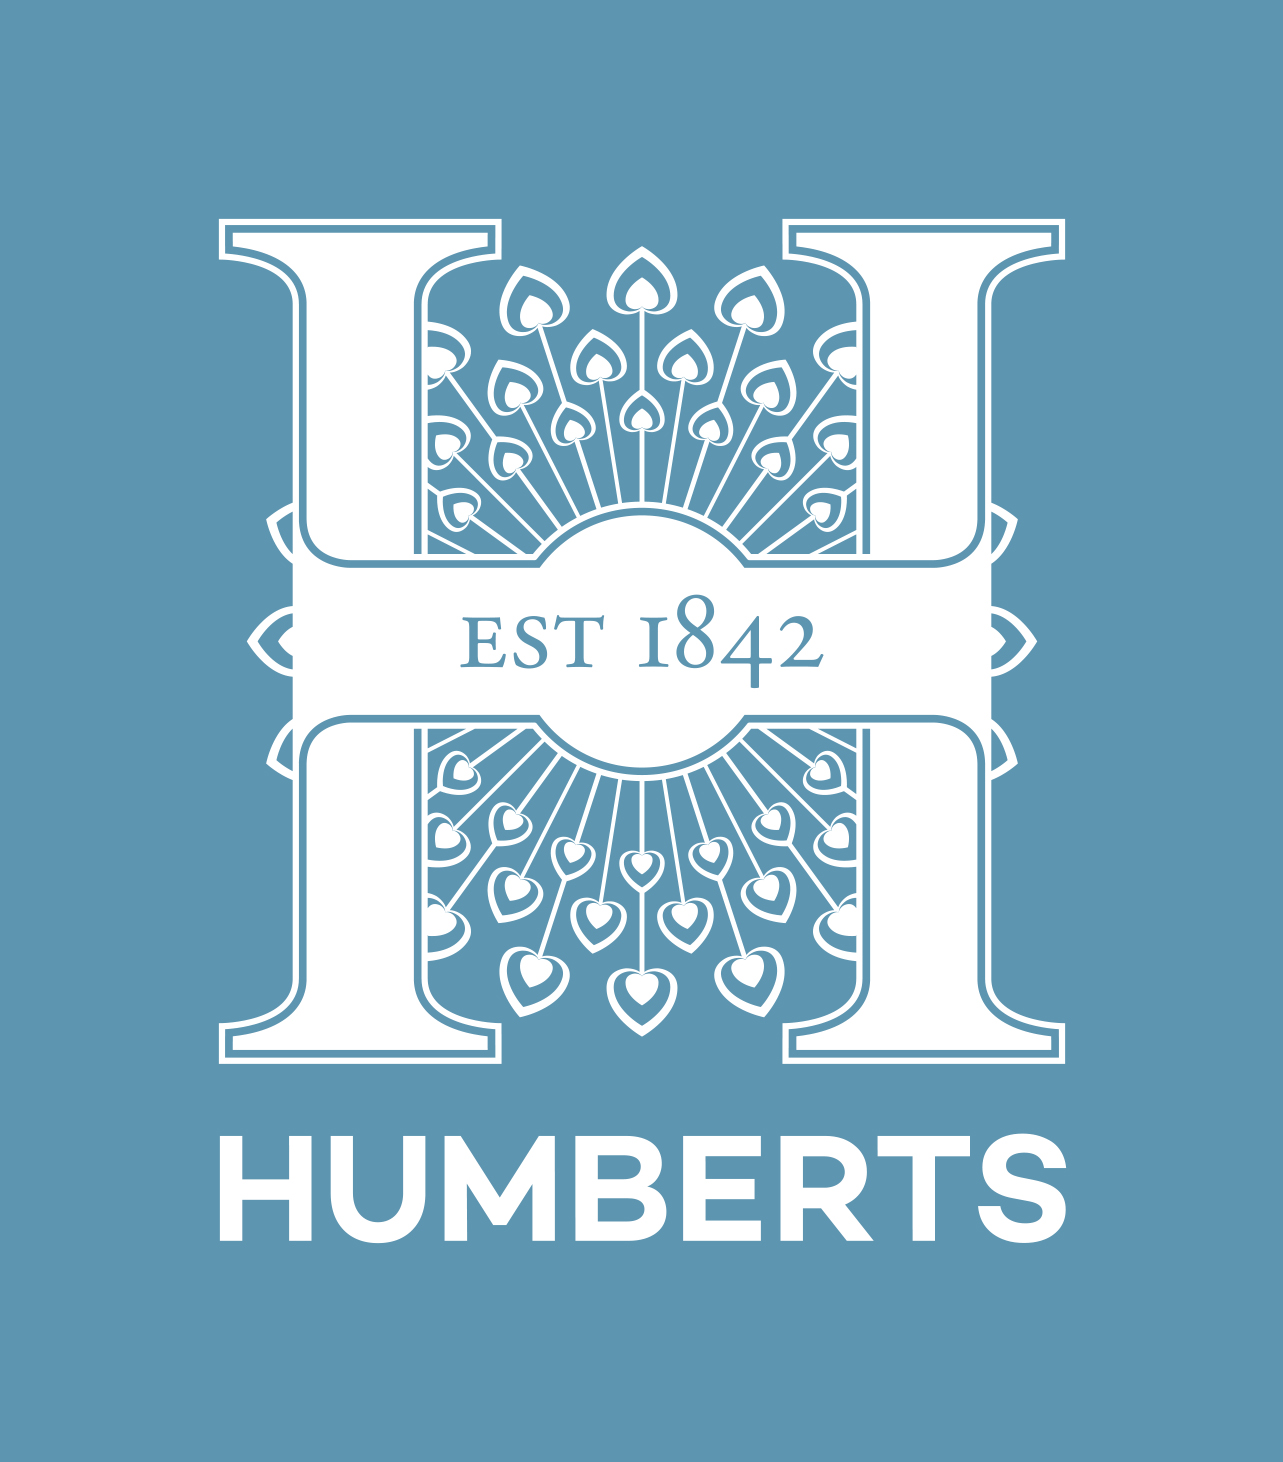 (c) Humberts.com